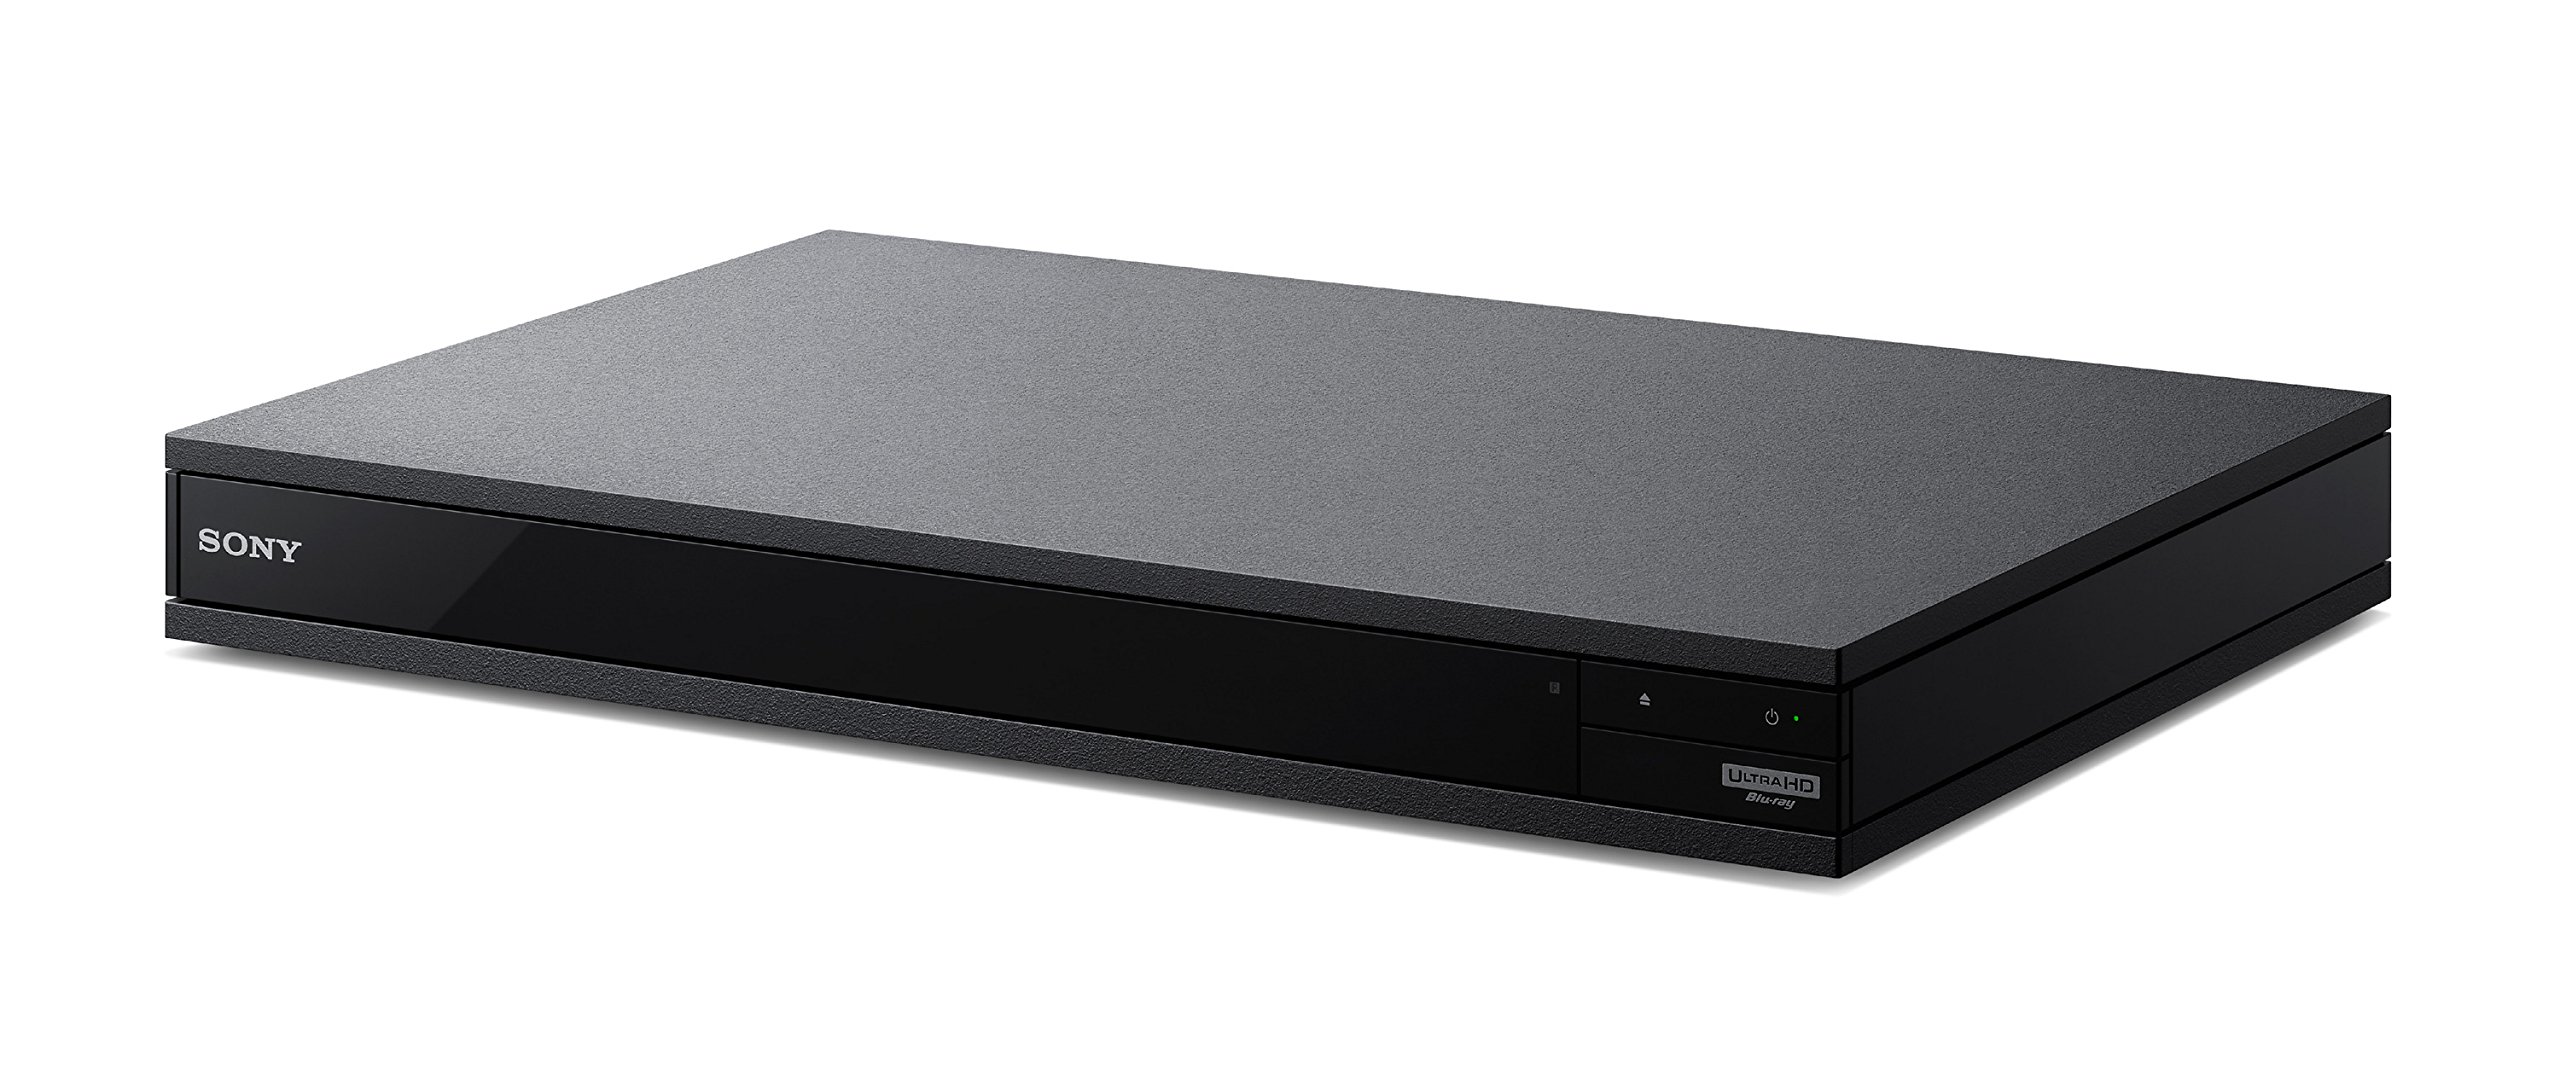 Sony UBP-X800 4K Ultra HD Blu-ray Player